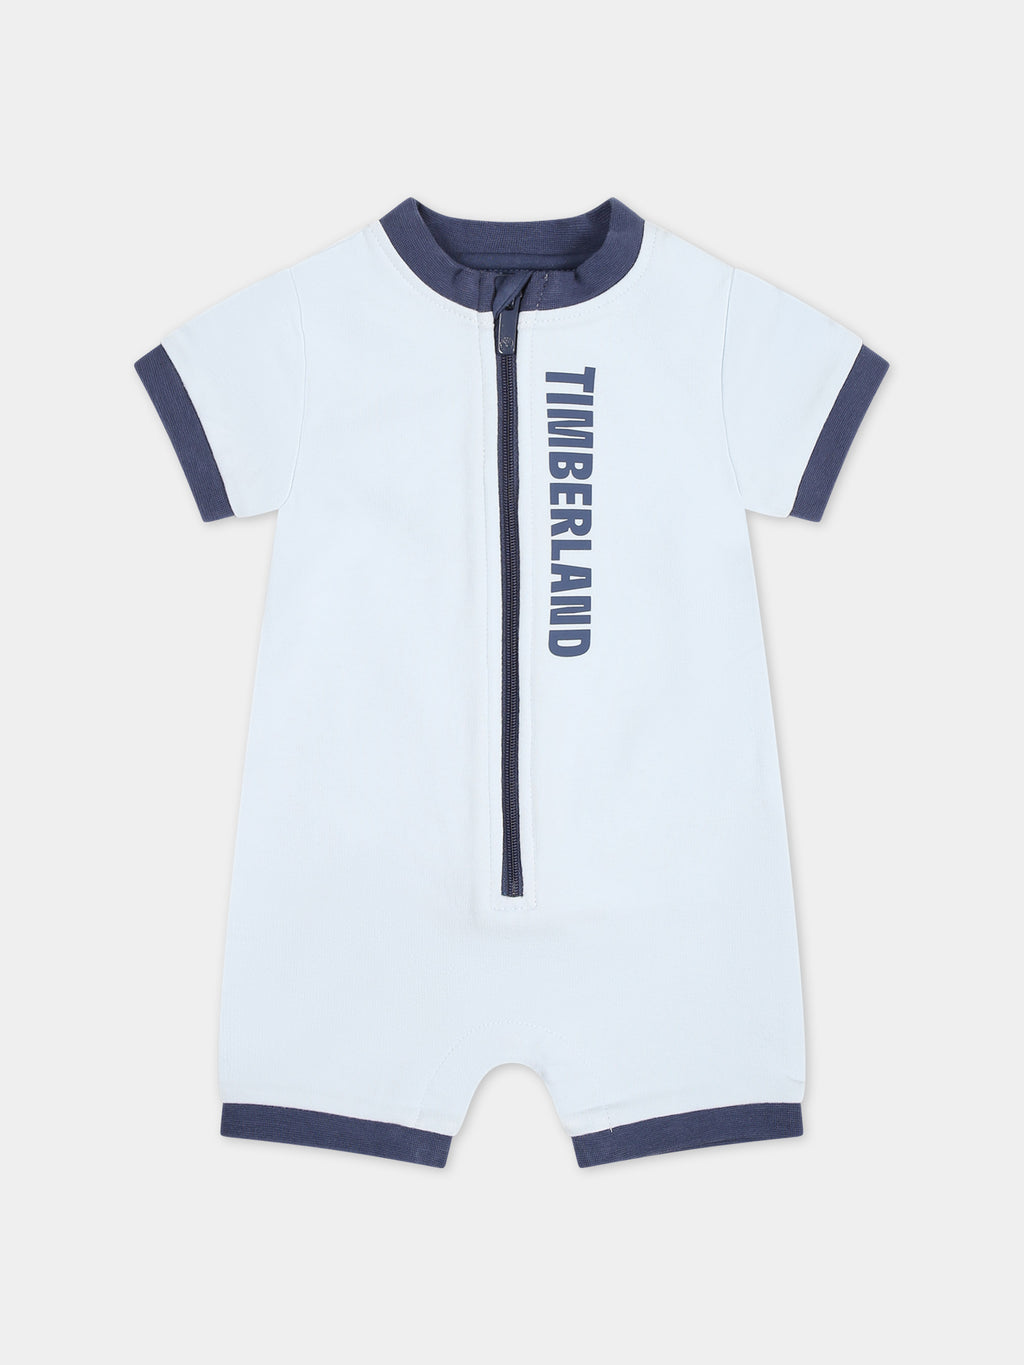 Barboteuse bleu clair pour bébé garçon avec logo